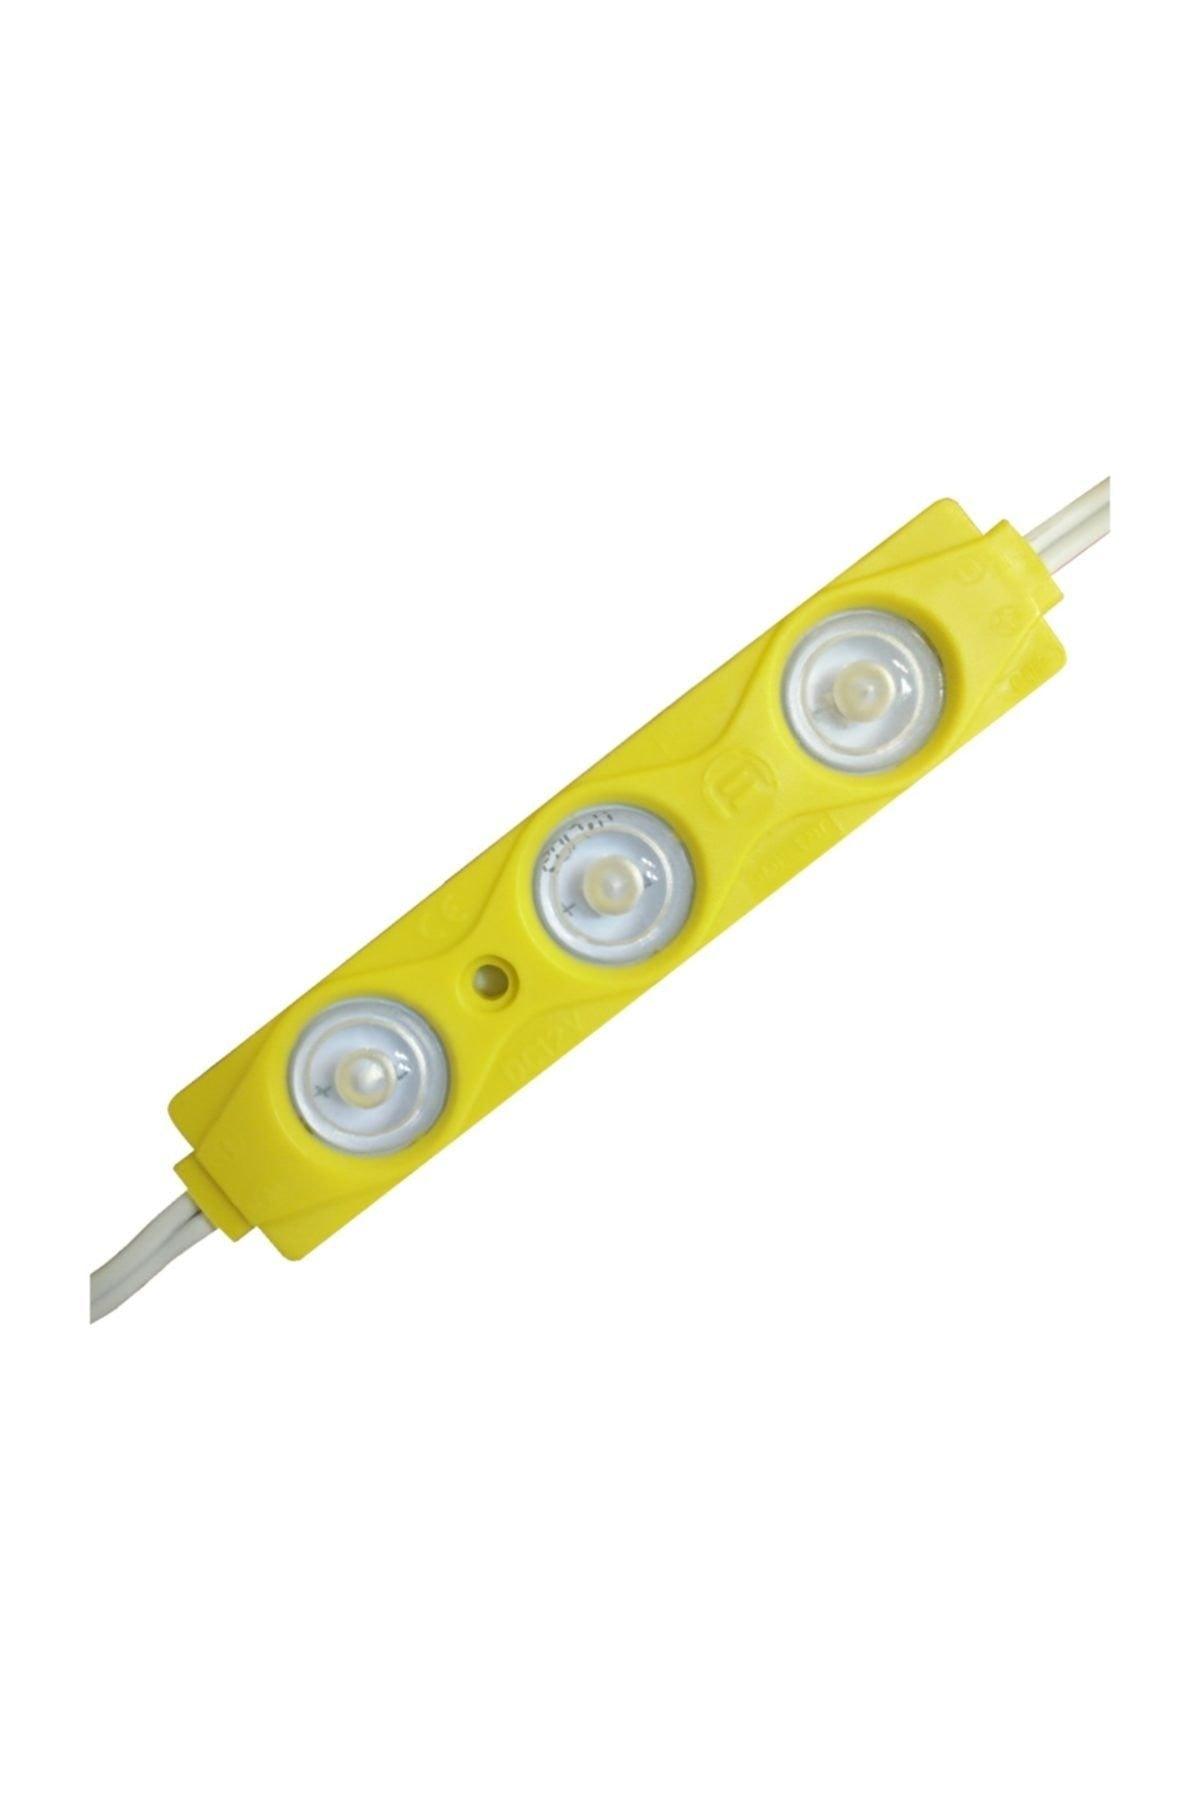 100 Pieces Lens Module Led 1.5 Watt Yellow